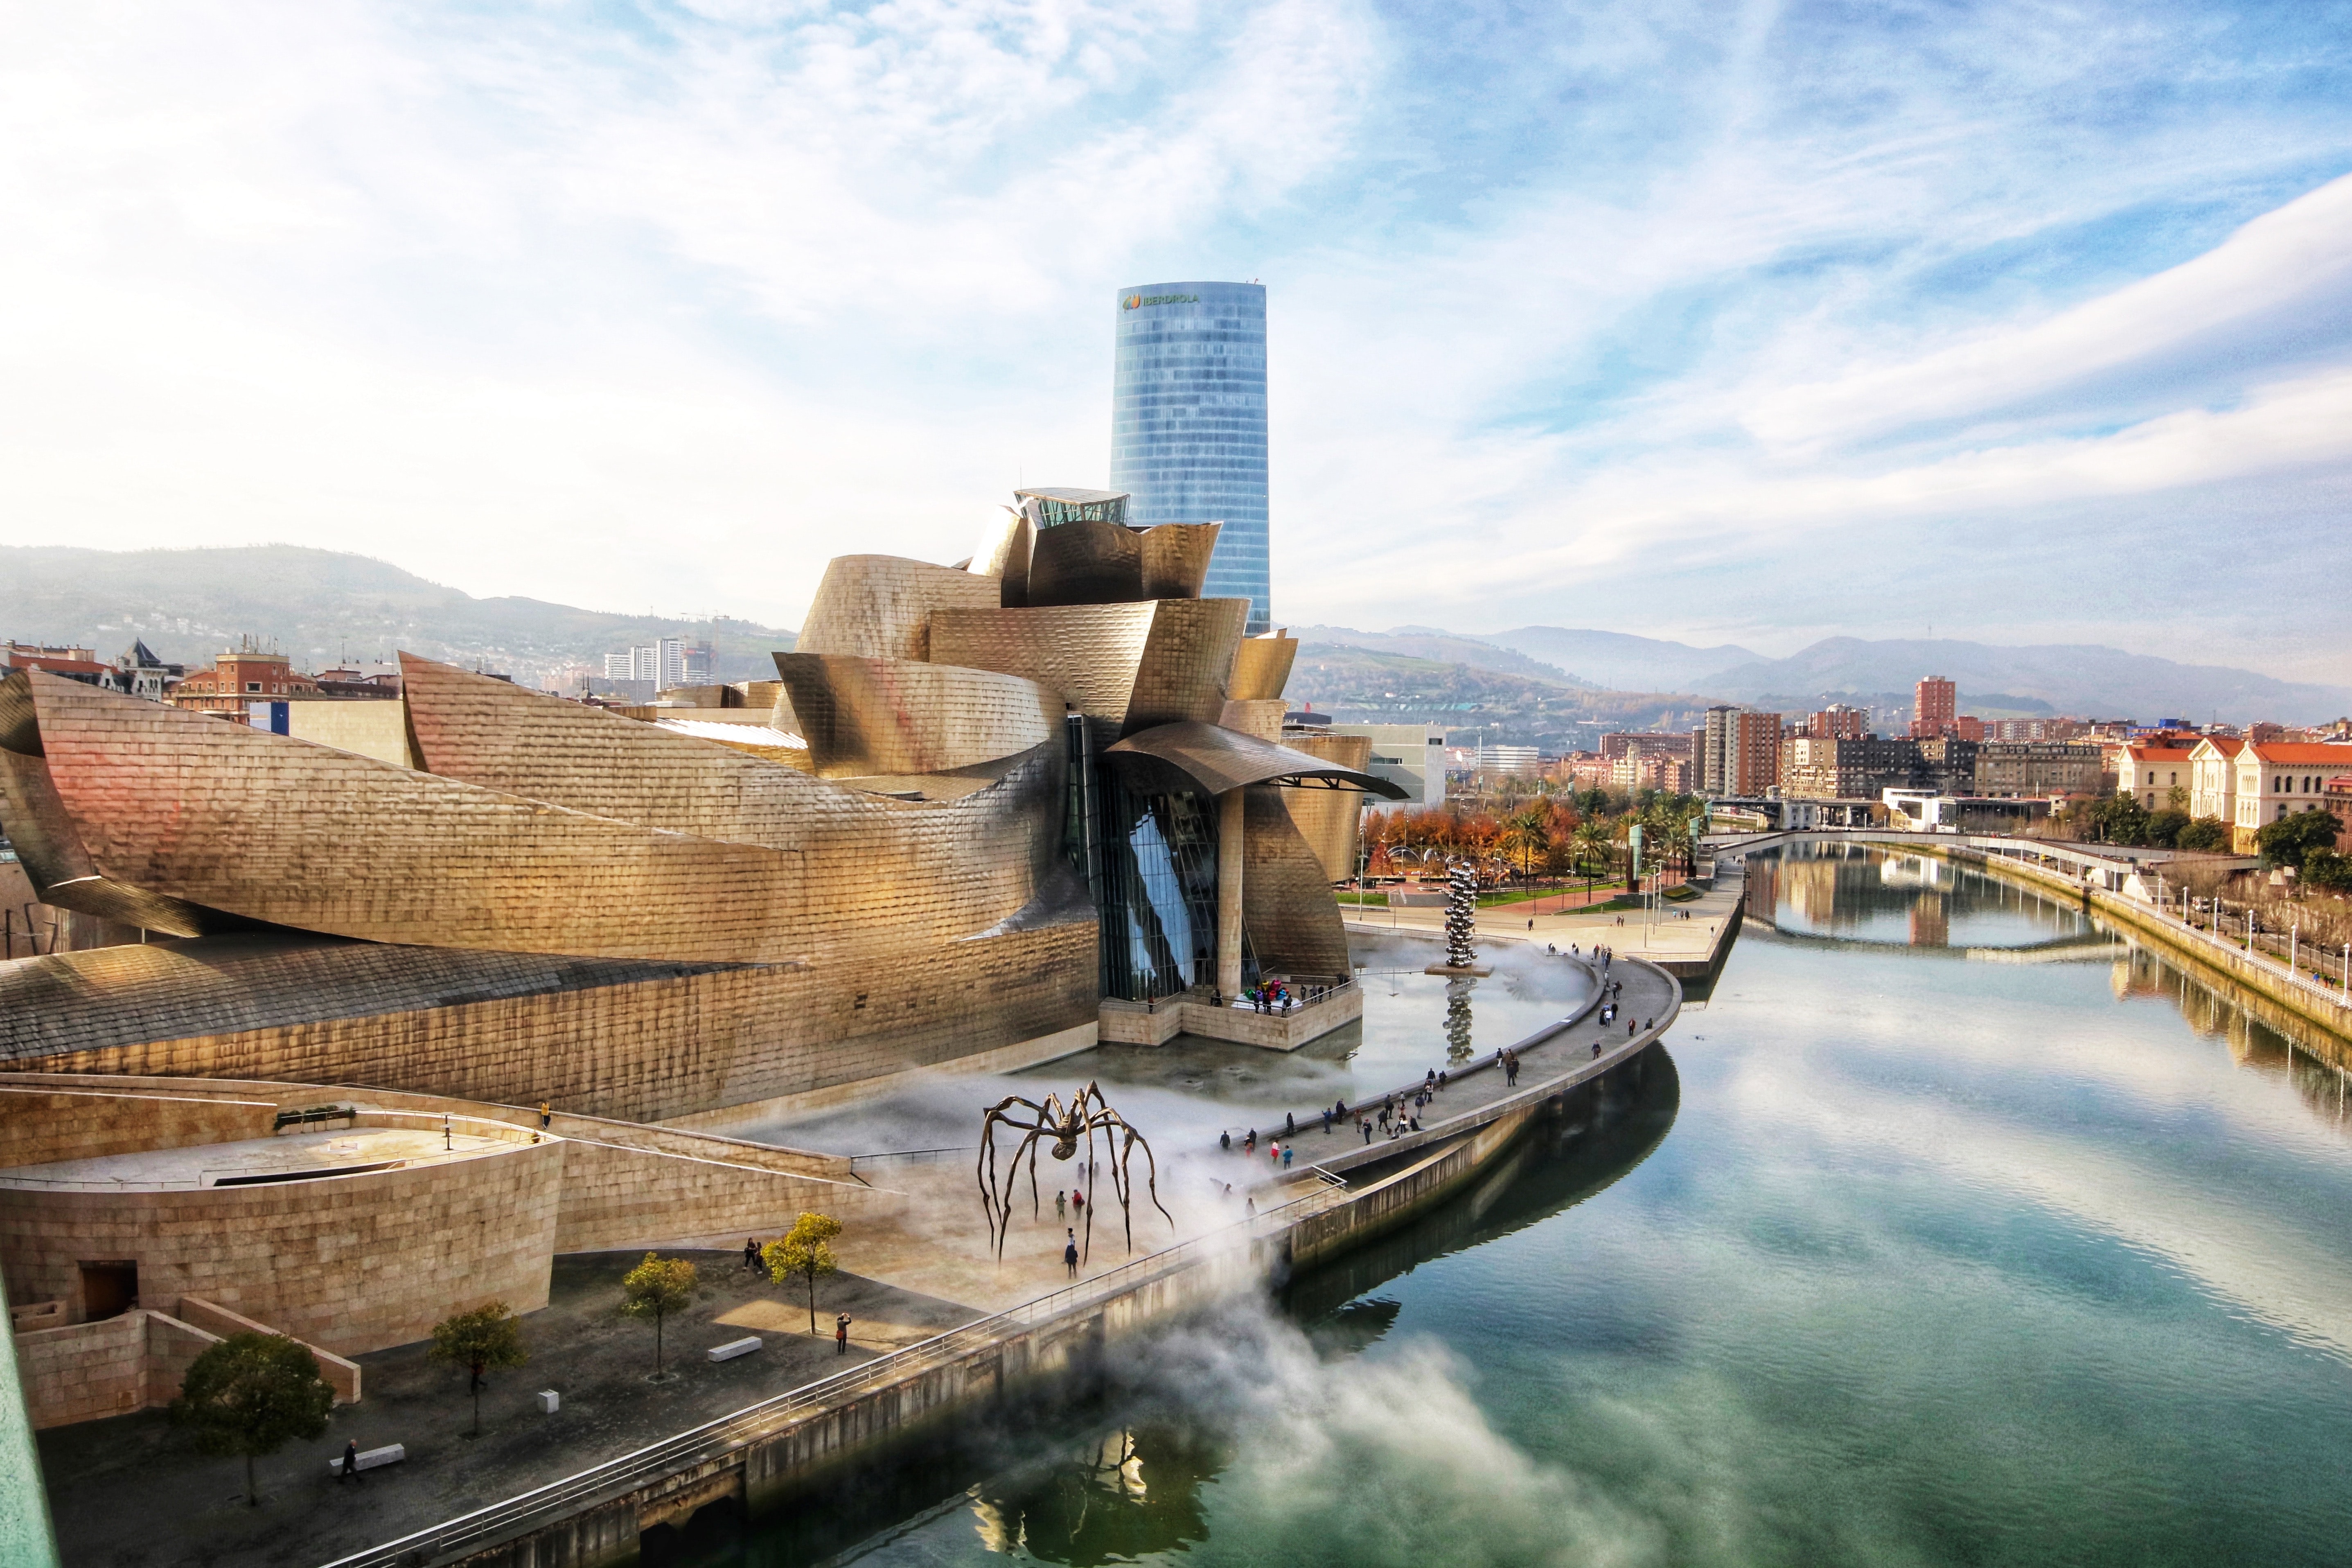 Museo Guggenheim de Bilbao (Photo by Jorge Fernández Salas on Unsplash)